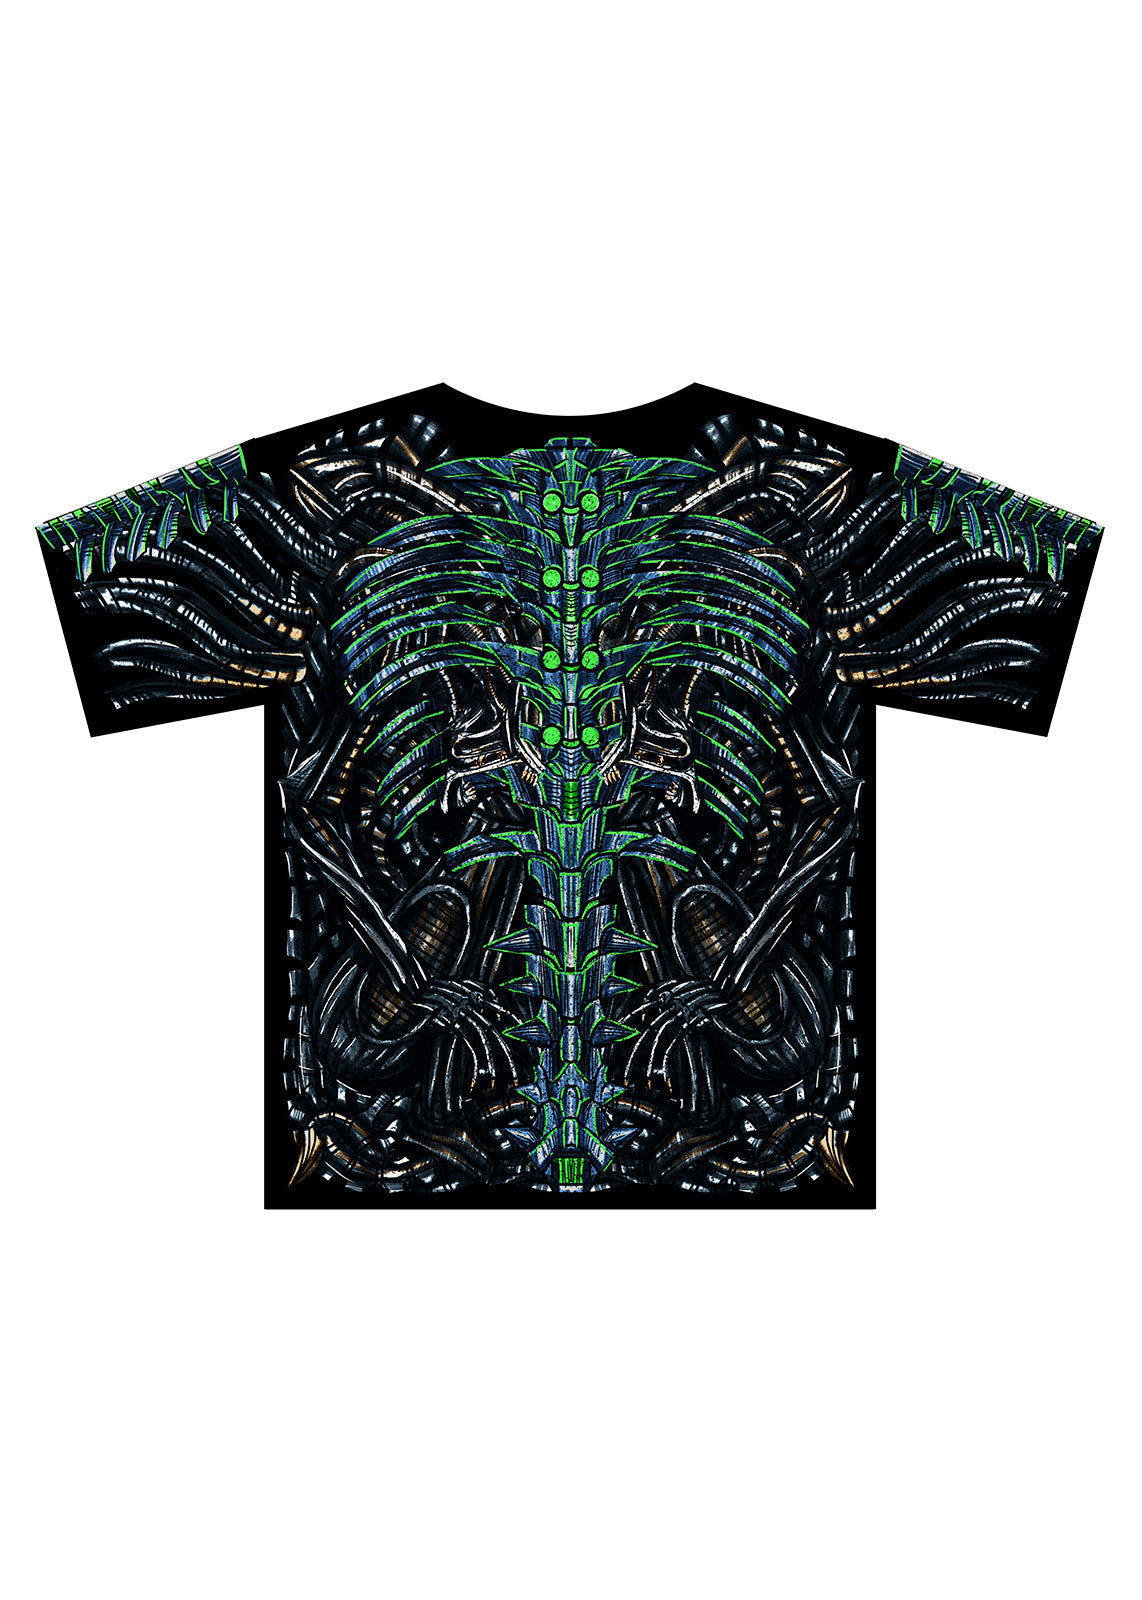 alien biomechanical H.R. Giger metal graphic t-shirt